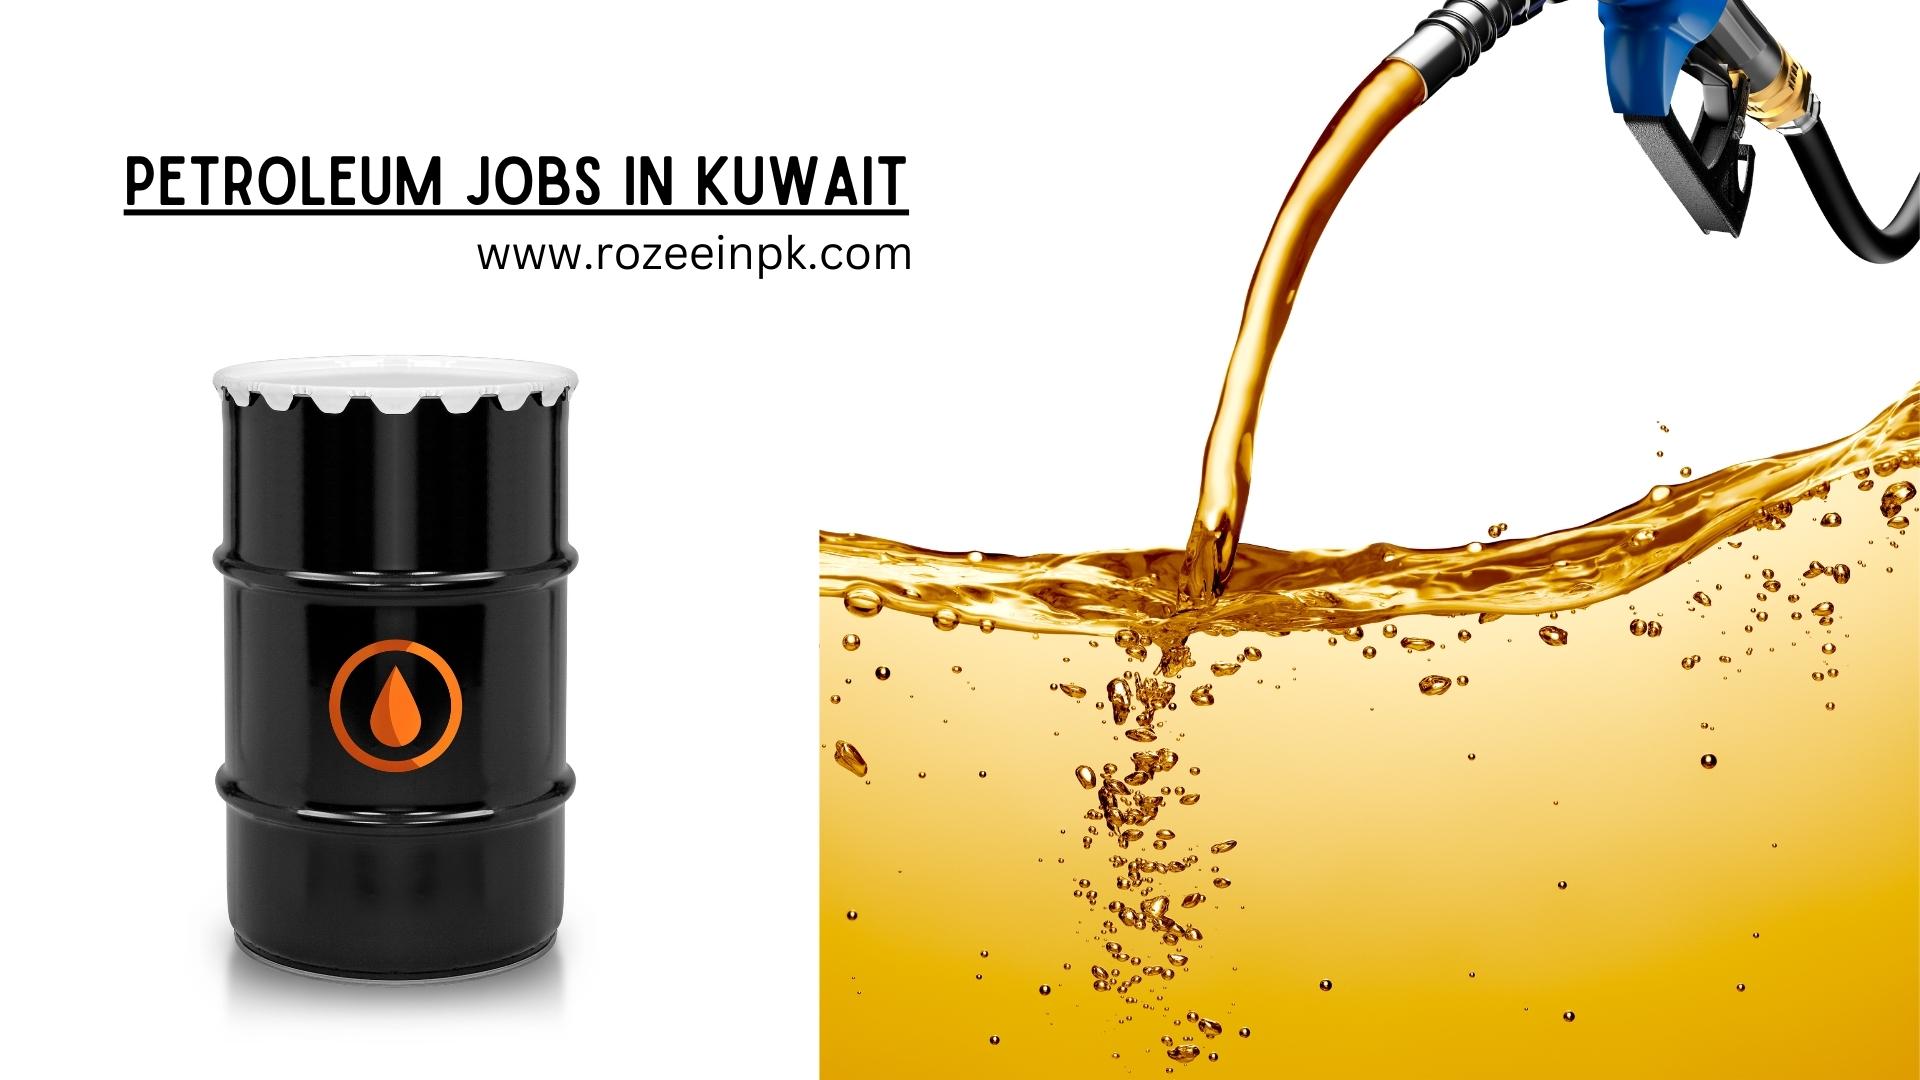 Petroleum jobs in Kuwait